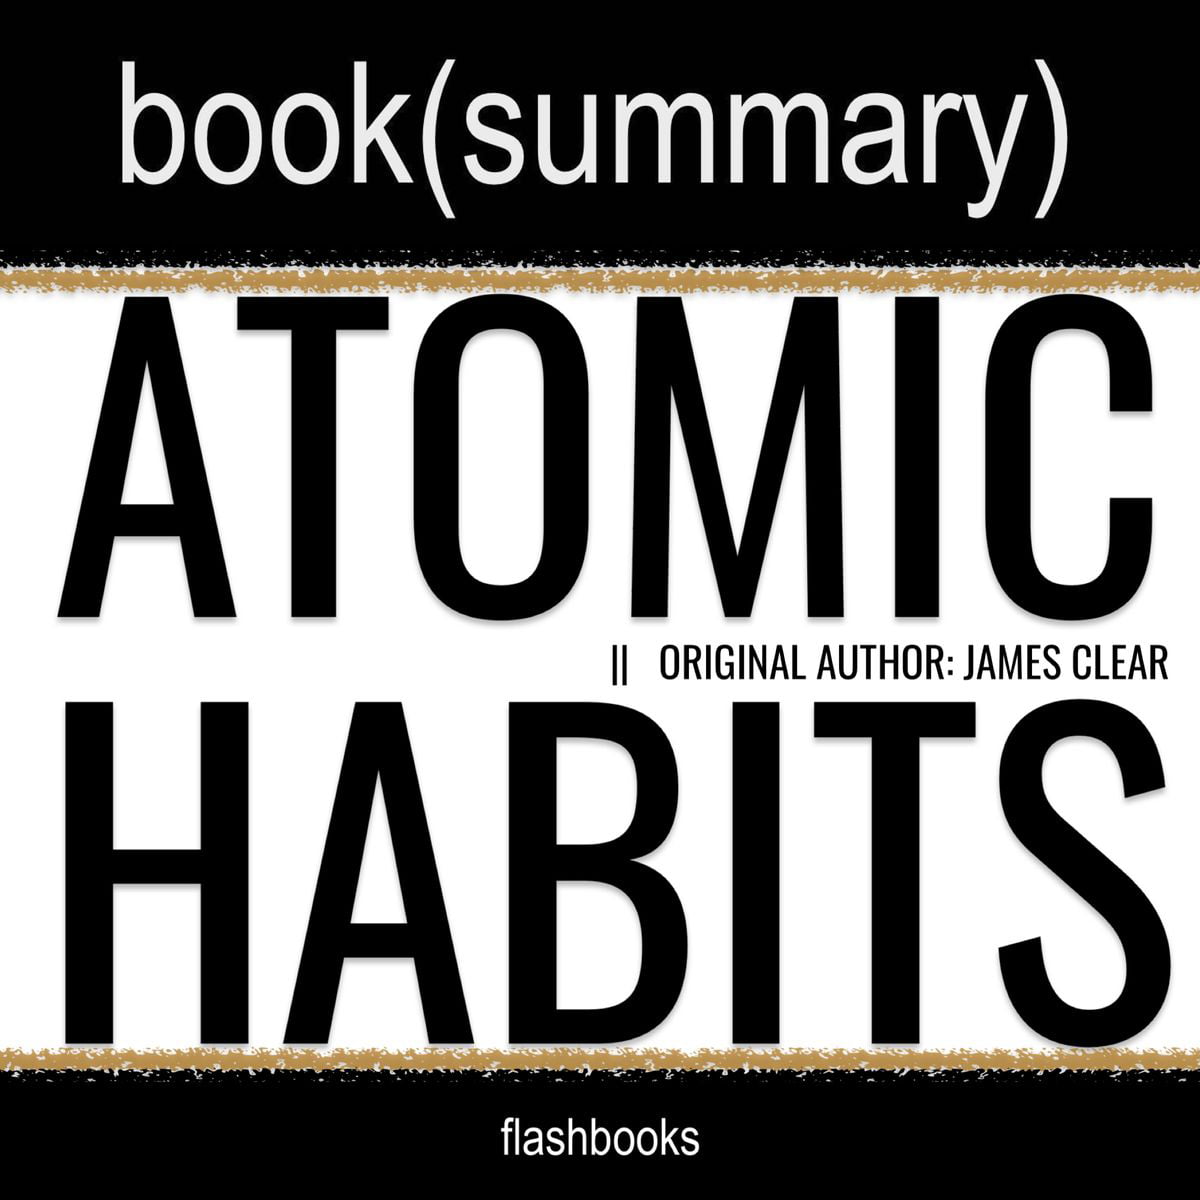 atomic habits audiobook download